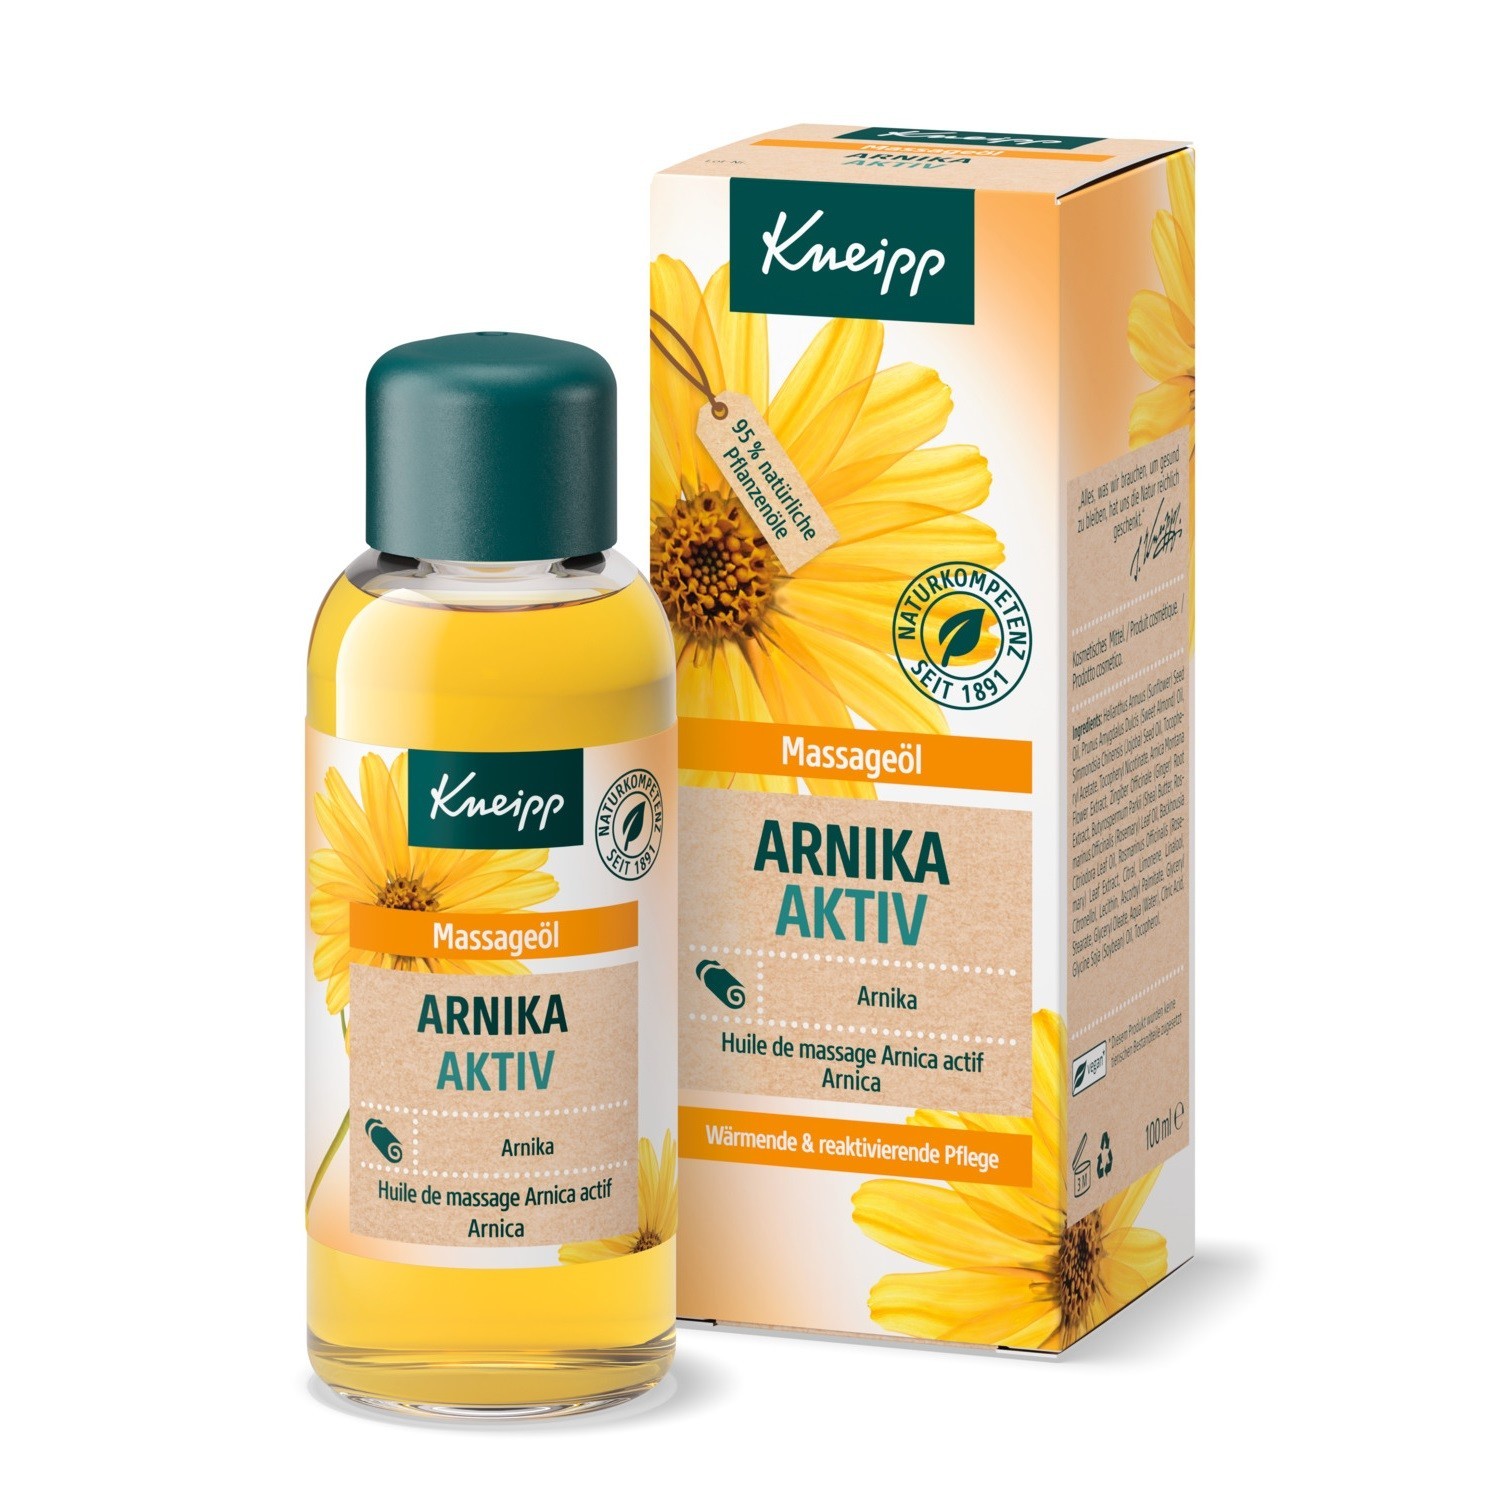 Kneipp Arnica massage oil